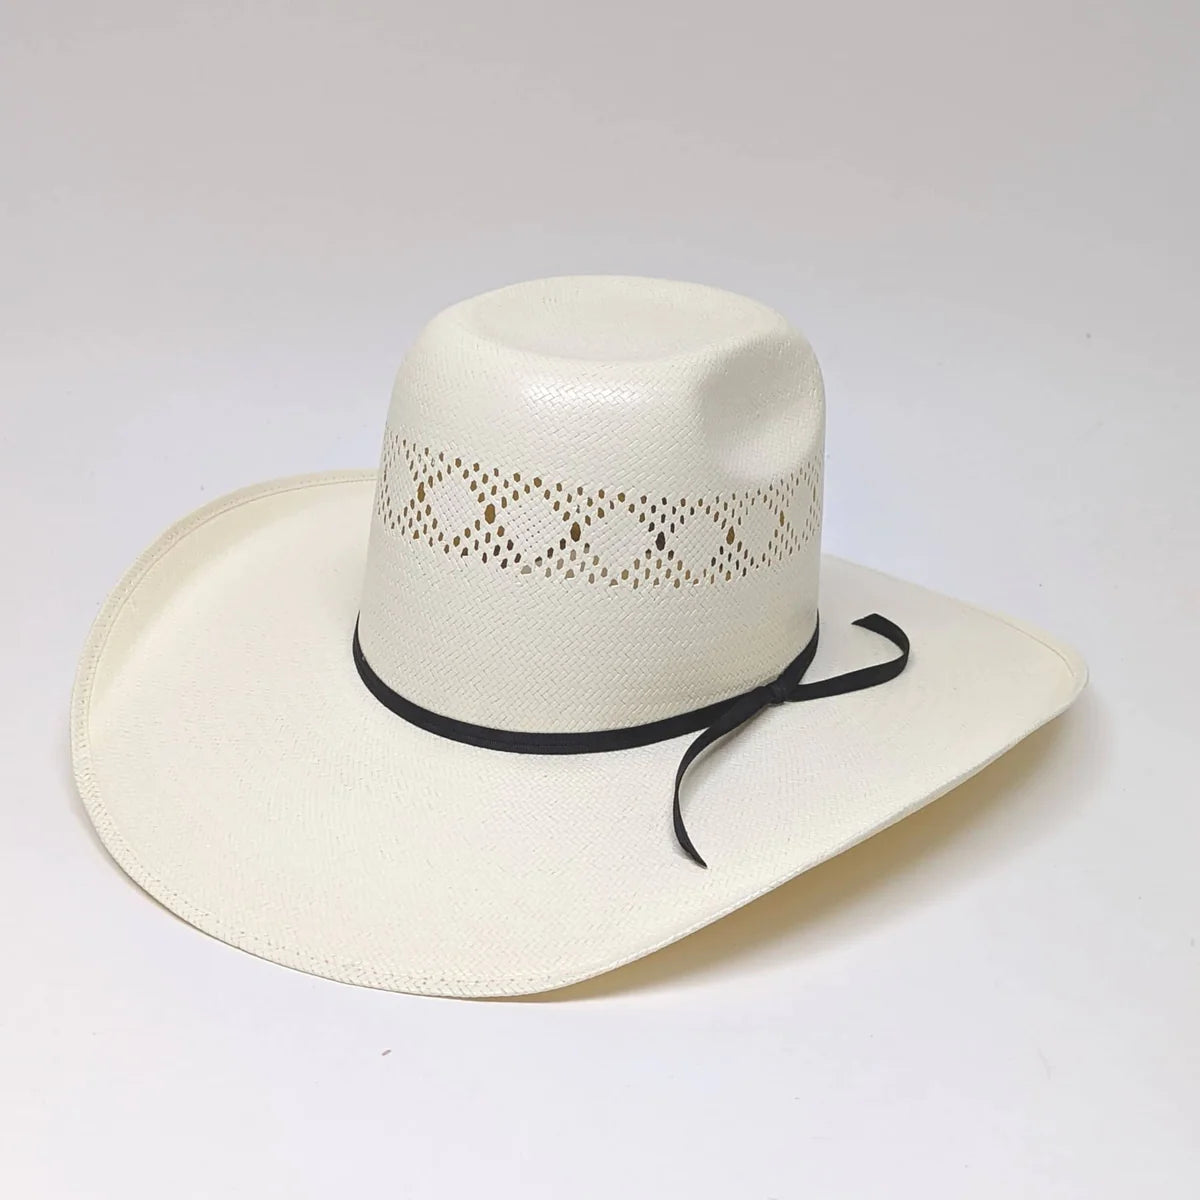 Elkhorn Open Crown Straw Cowboy Hat- Natural